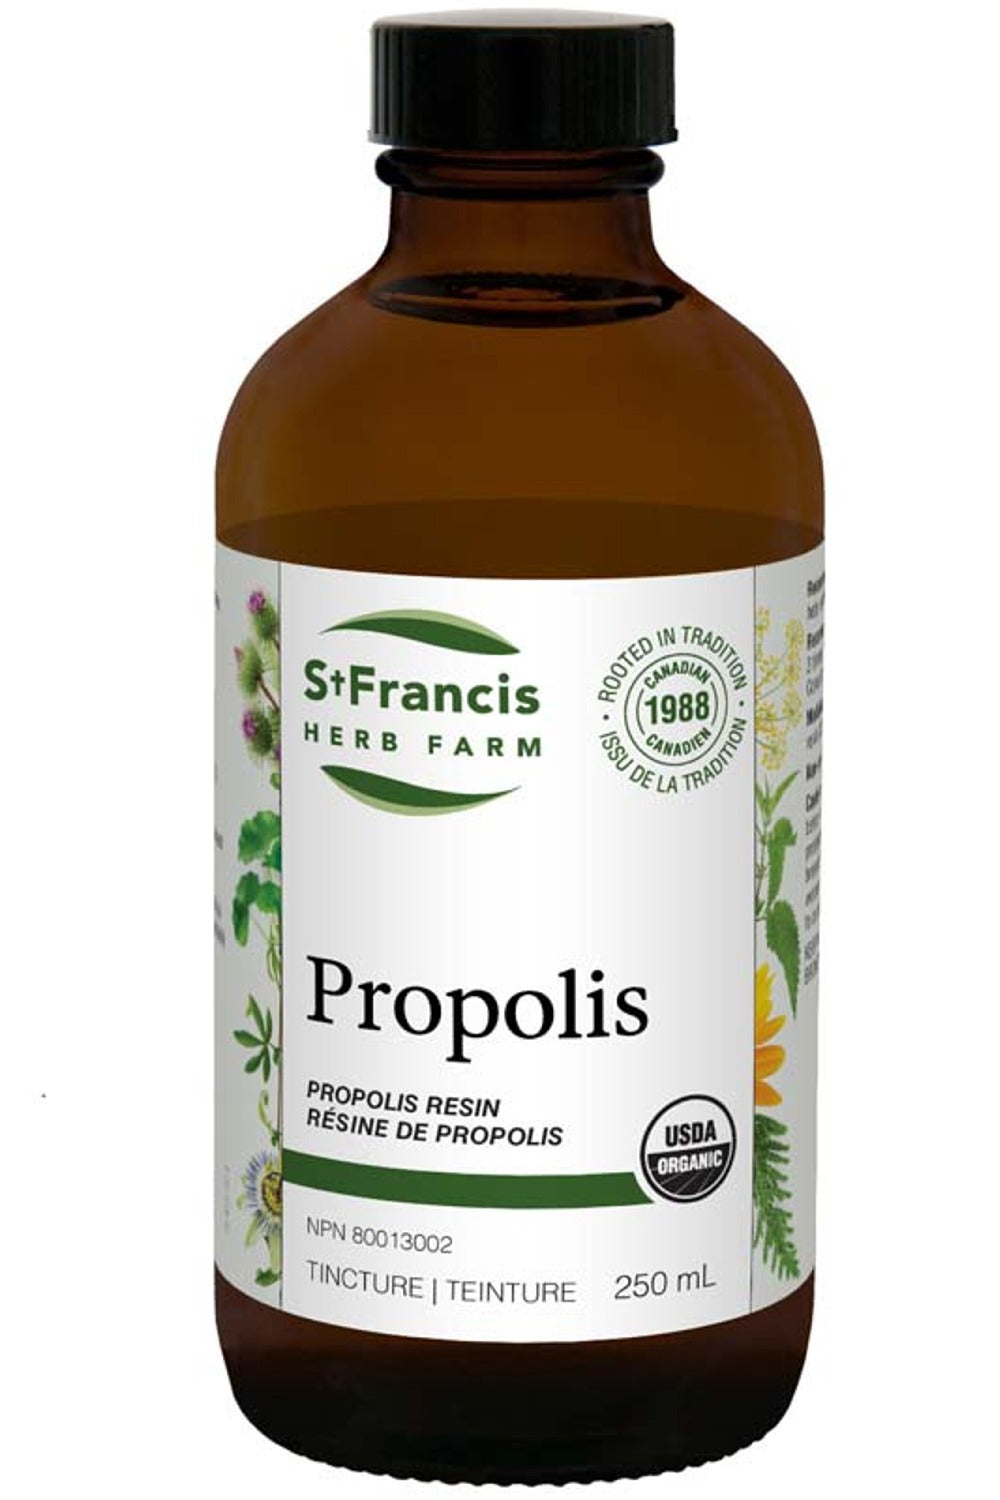 ST FRANCIS HERB FARM Propolis  (250 ml)